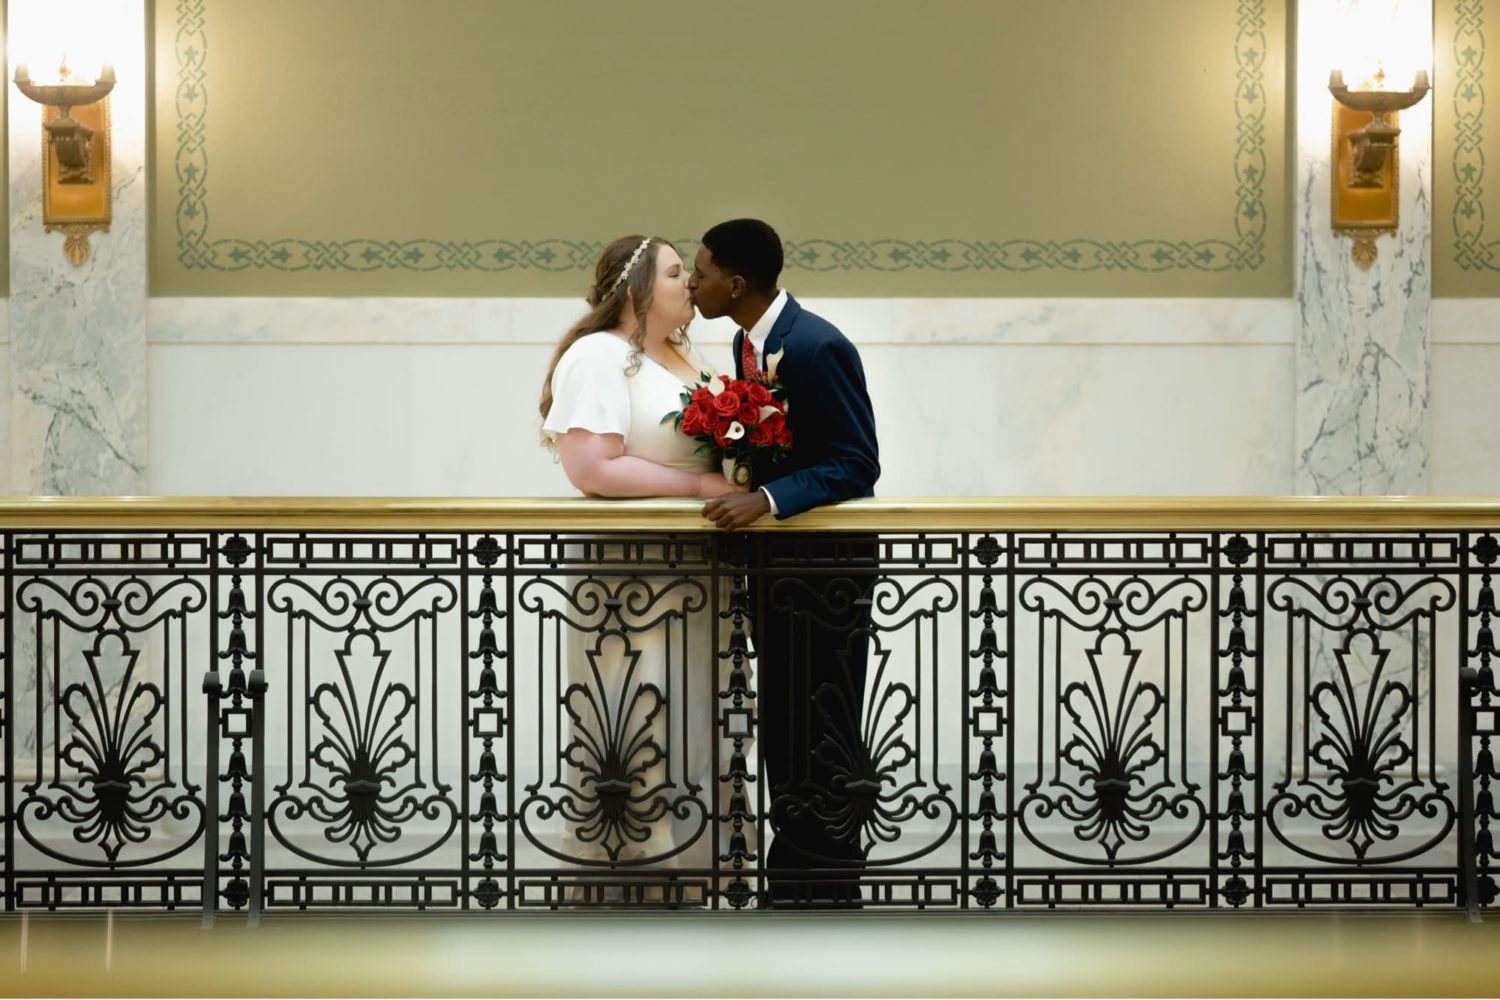 Des Moines Iowa courthouse wedding portraits